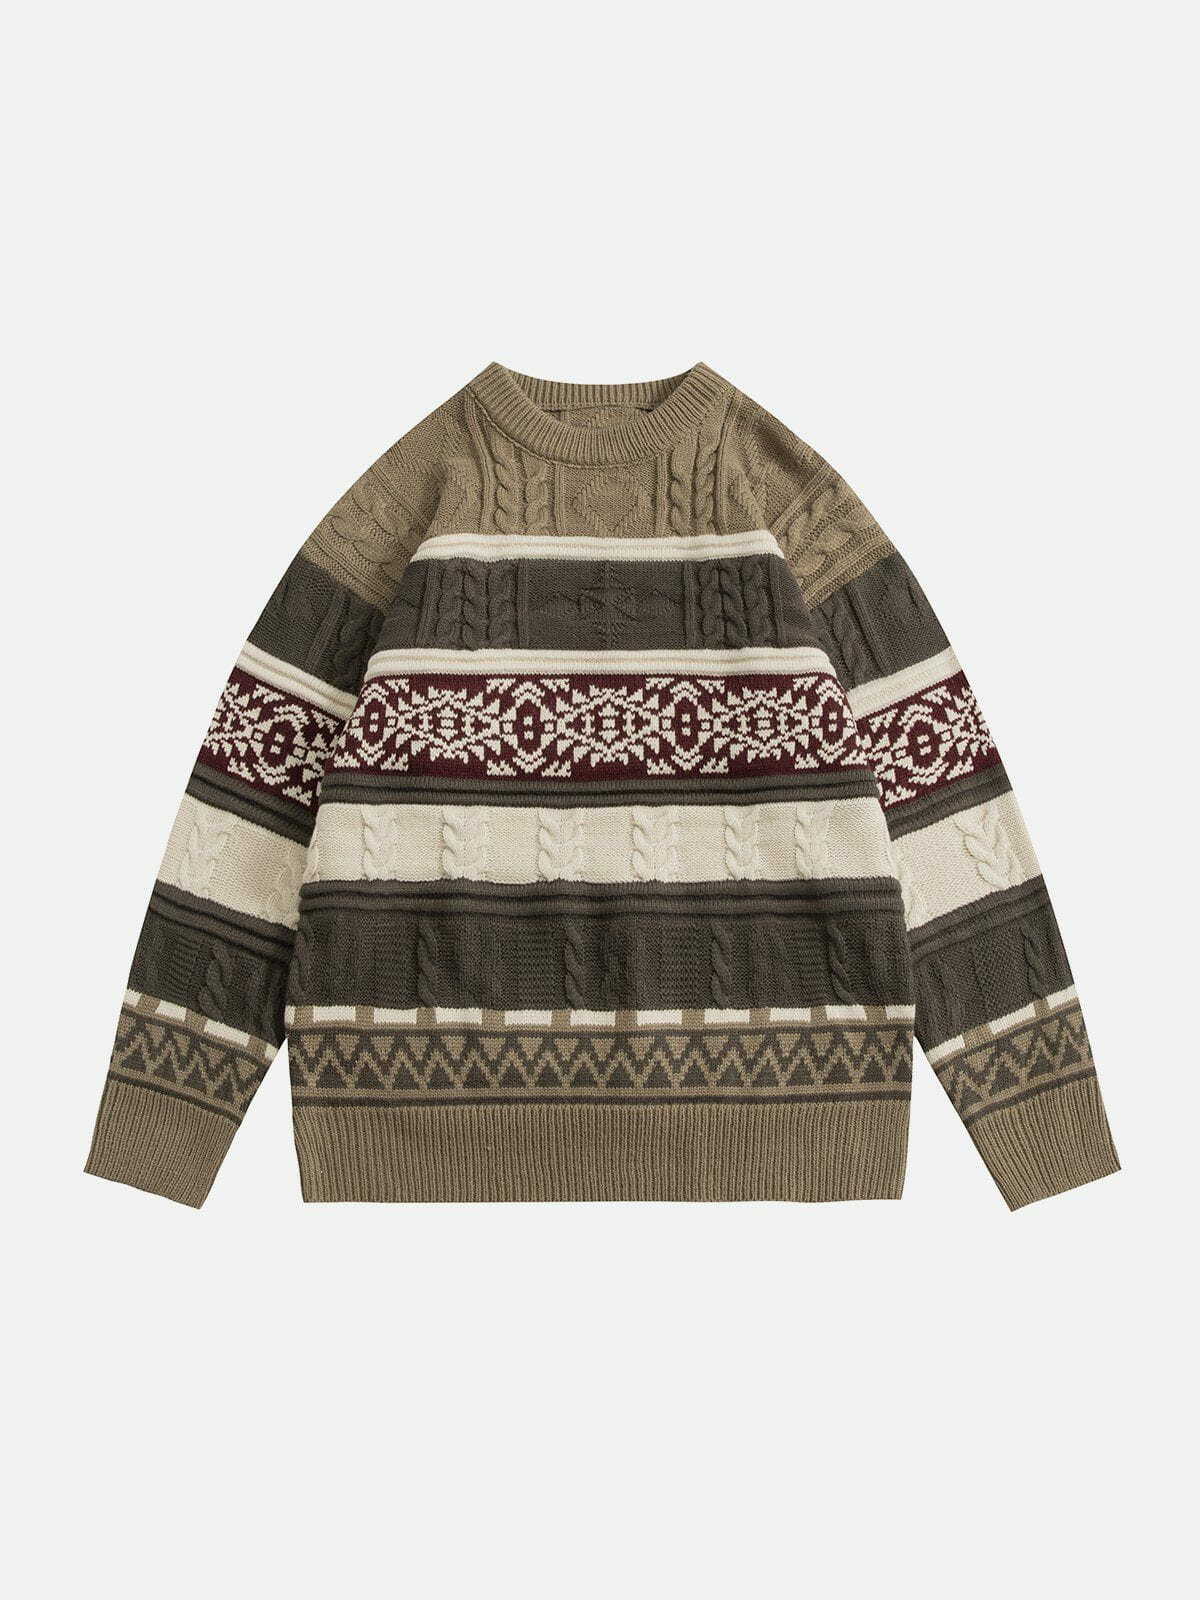 vintage jacquard sweater edgy urban knitwear 8178